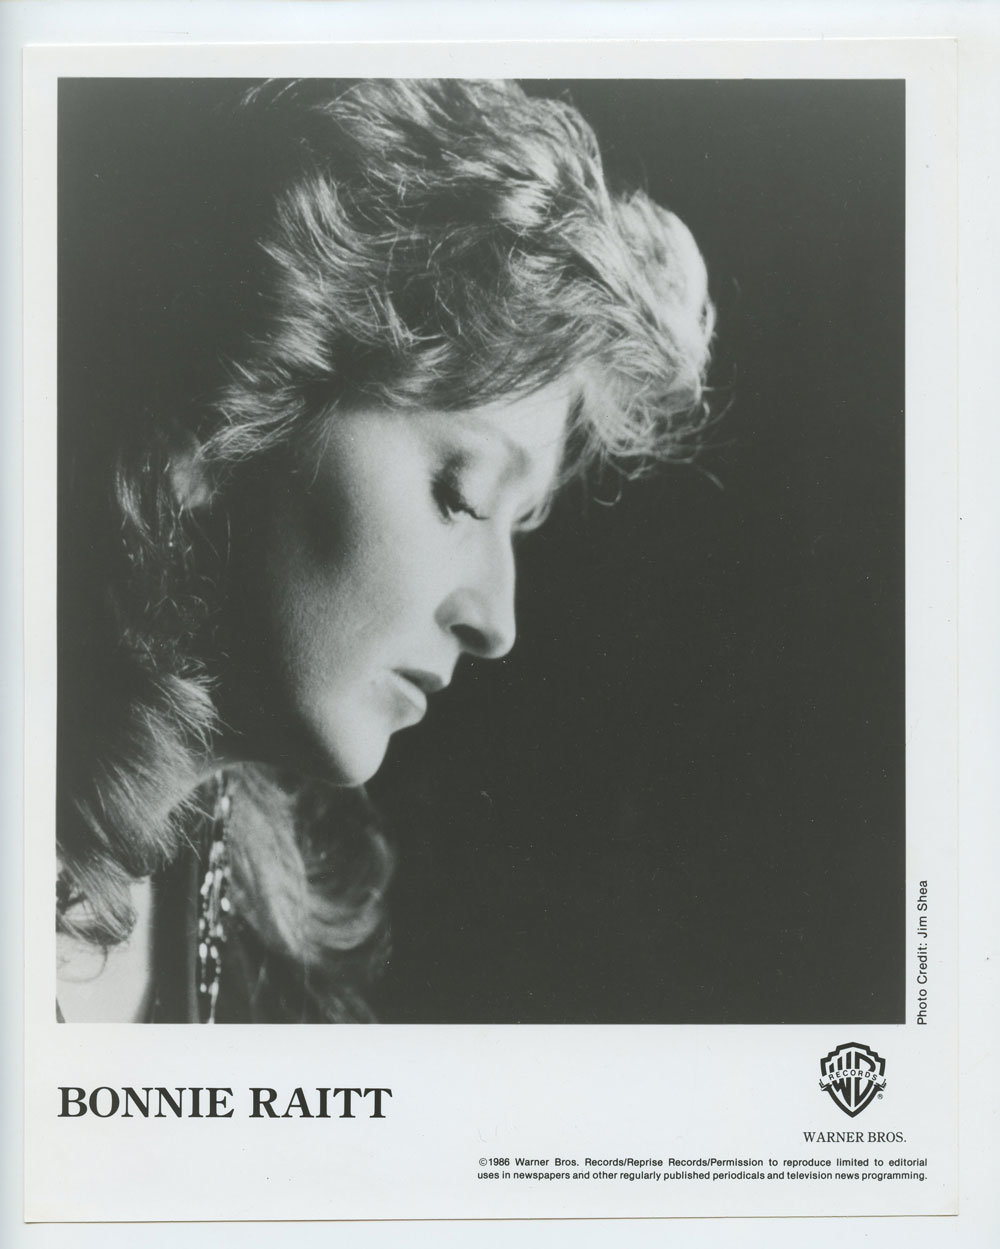 Bonnie Raitt Photo 1980s Warner Bros Records